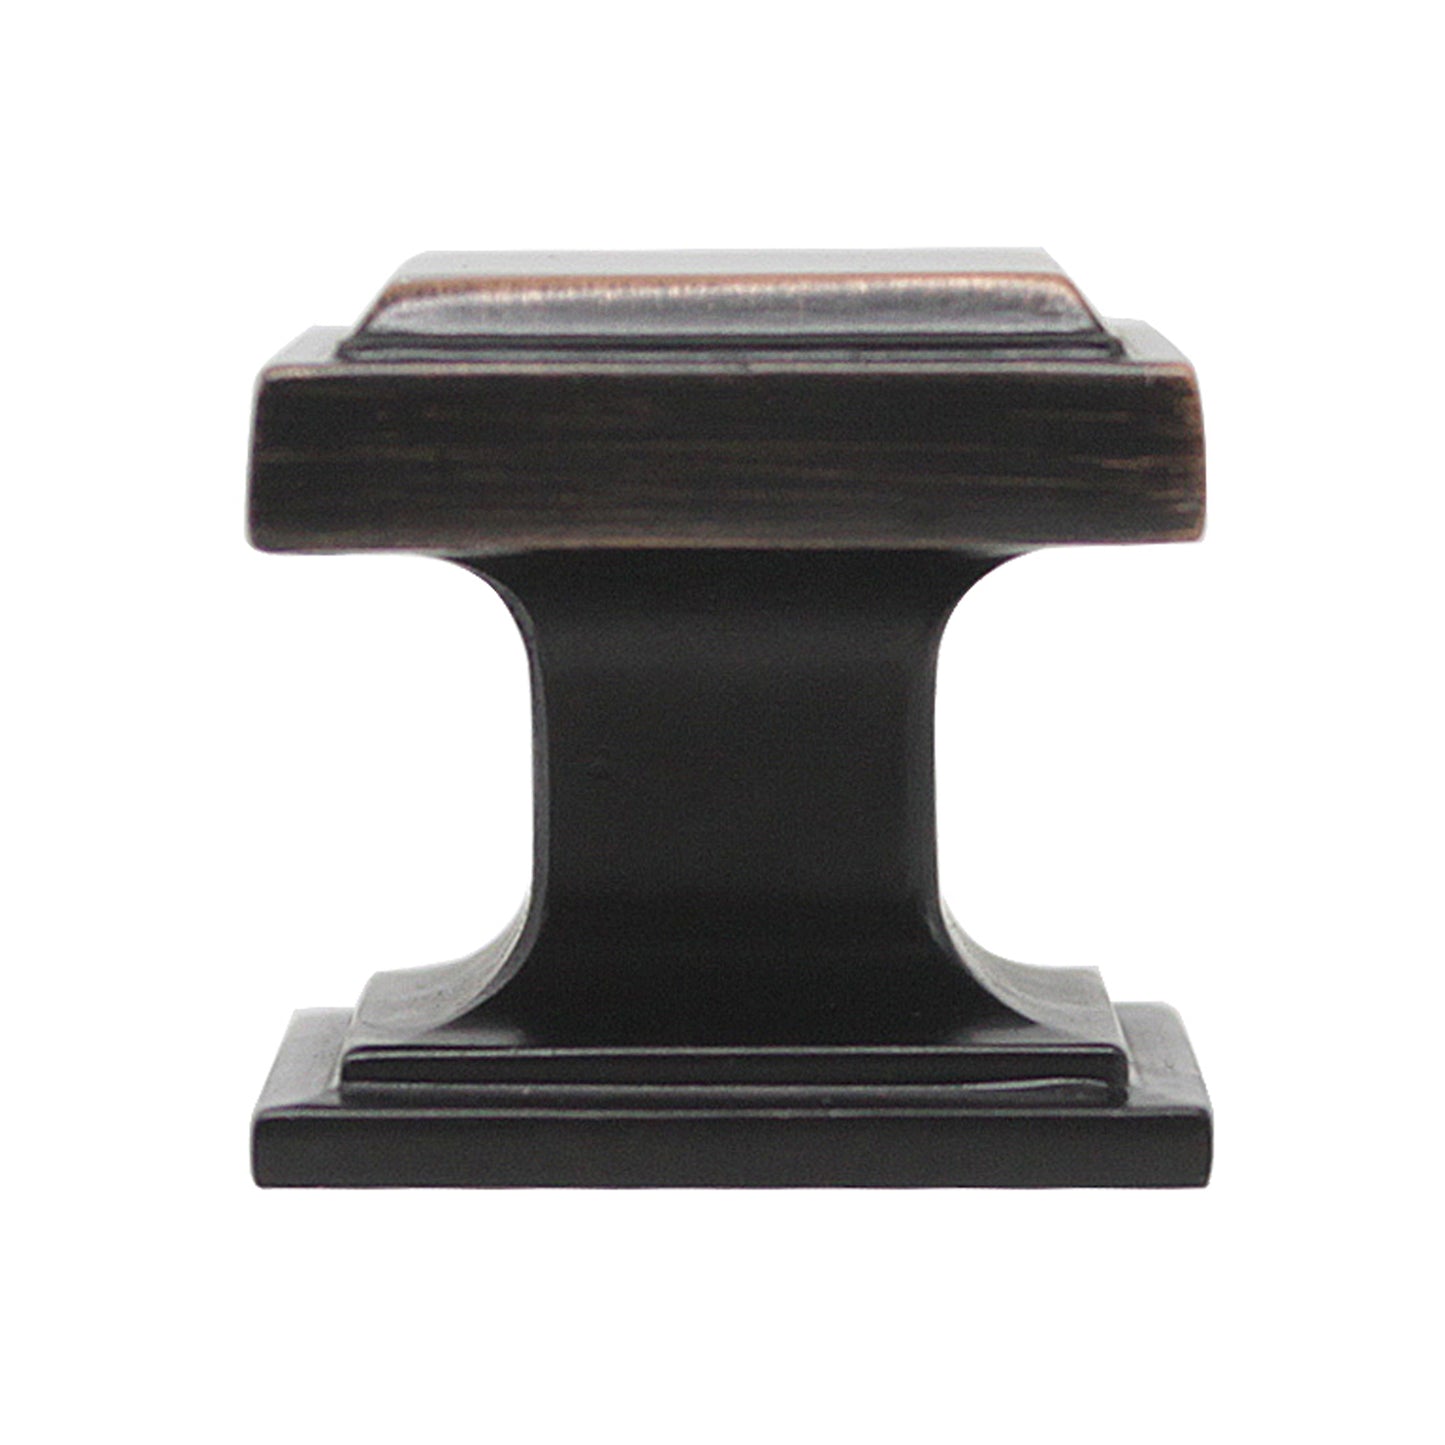 25mm 1inch Square Cabinet Knobs in Oil Rubbed Bronze / Black PS7110 - Probrico